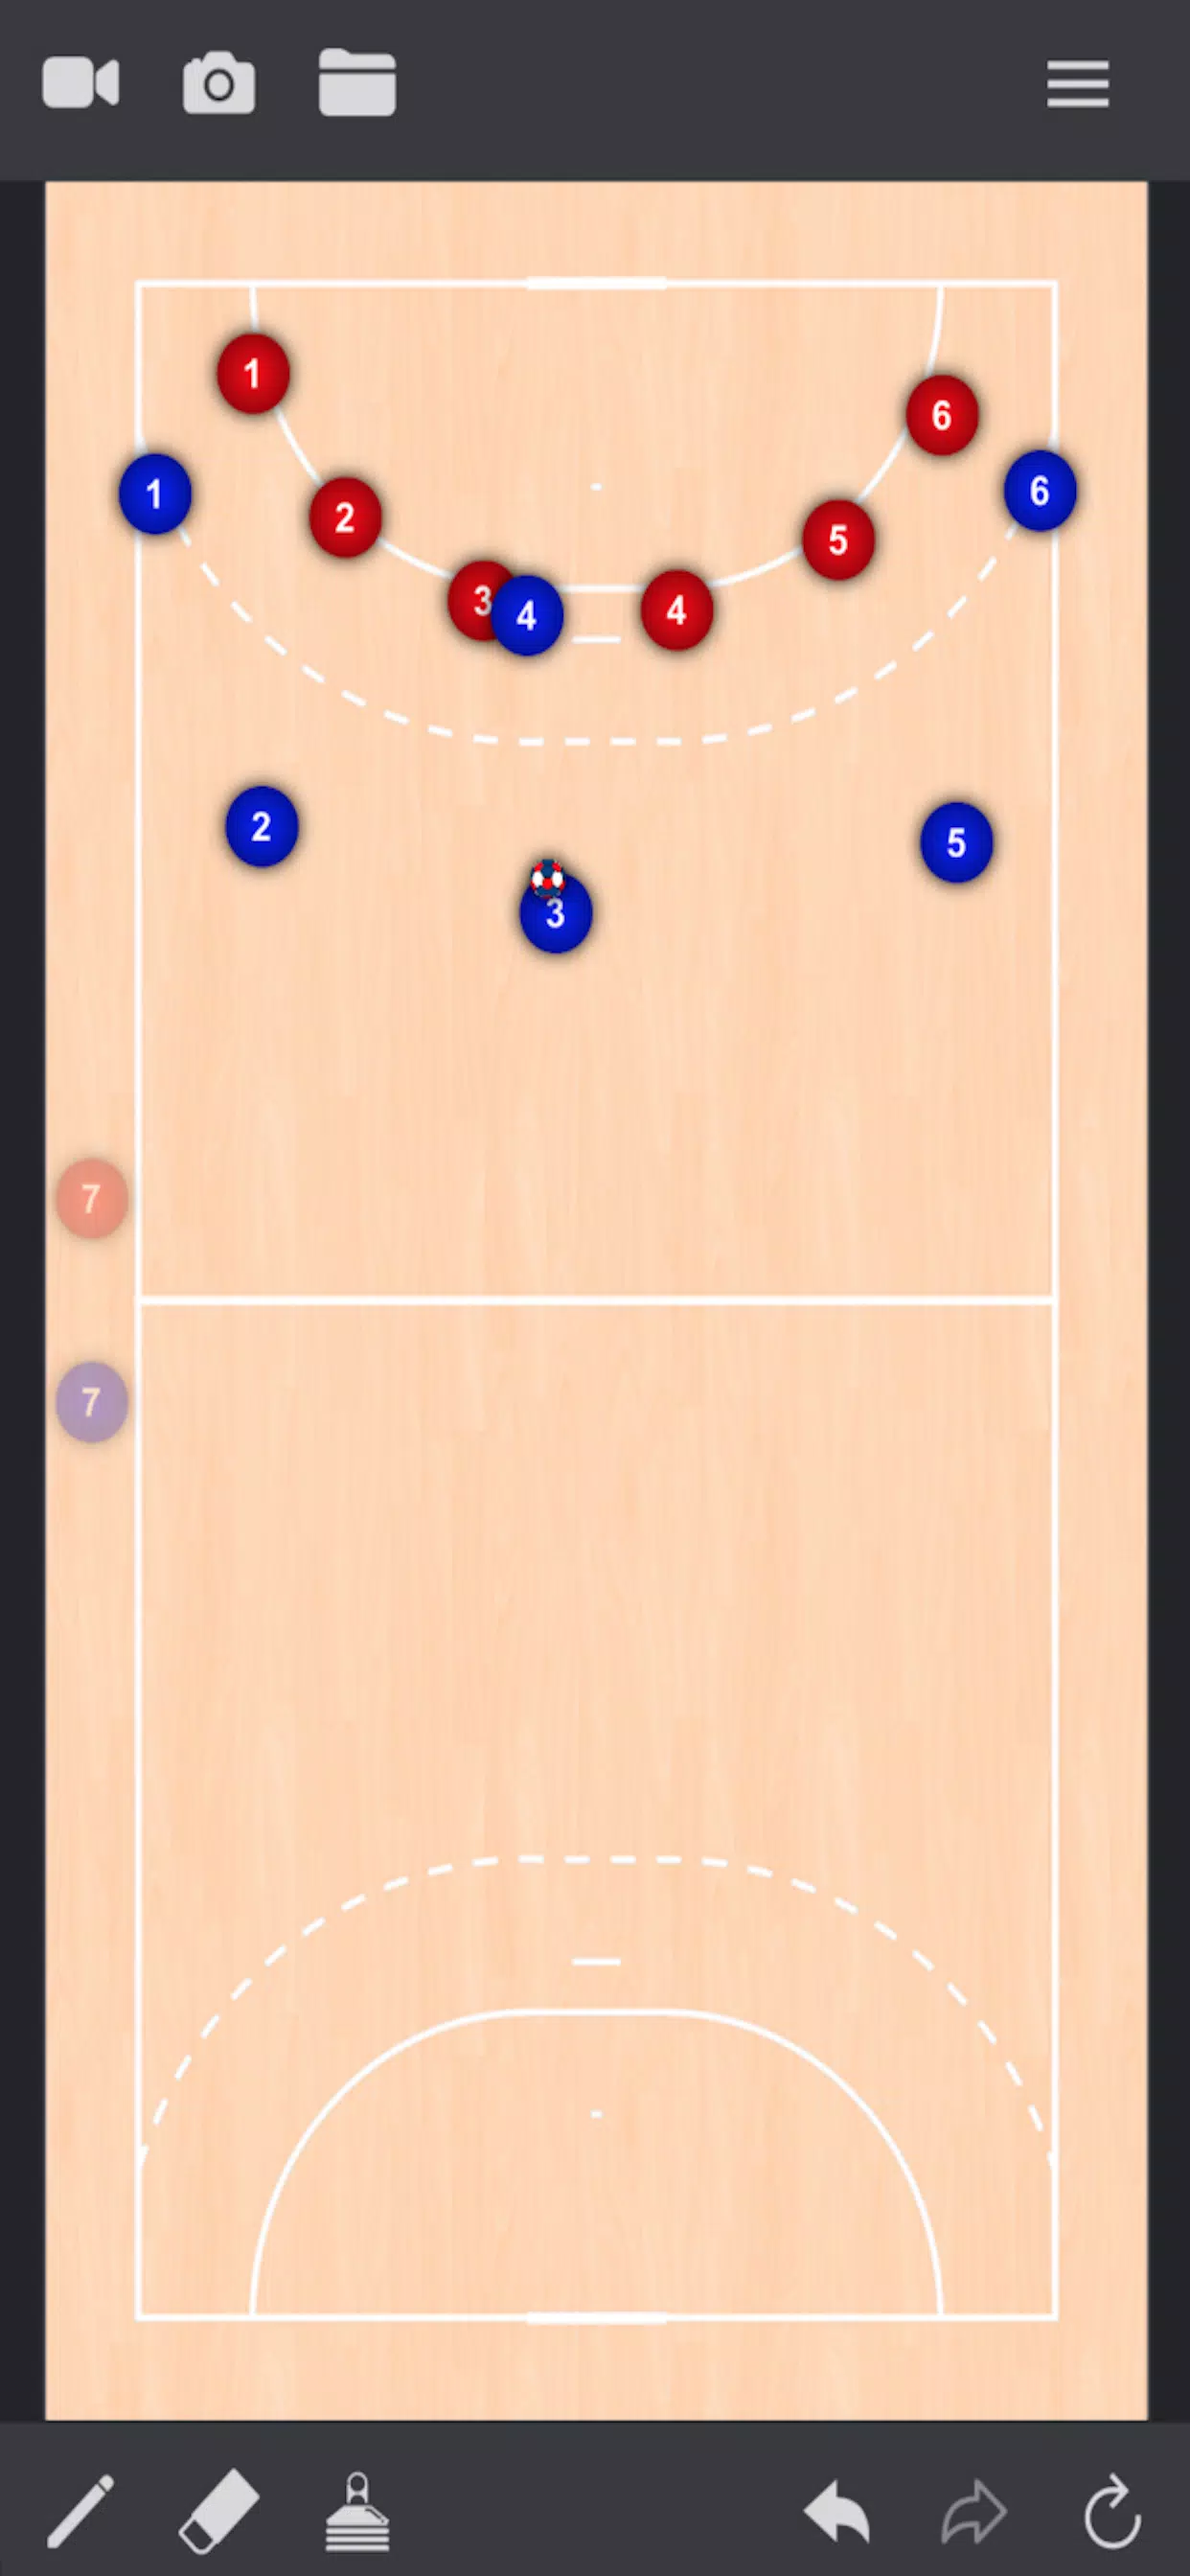 Hey Handball: pizarra táctica de balonmano pour Android - Téléchargez l'APK